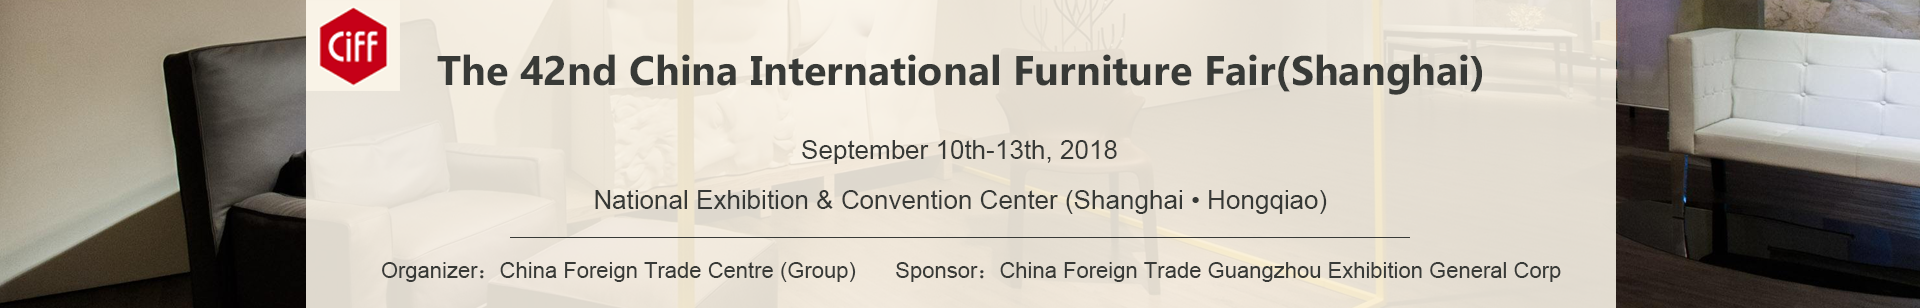 The 42nd China International Furniture Fair(Shanghai)Visiting Group